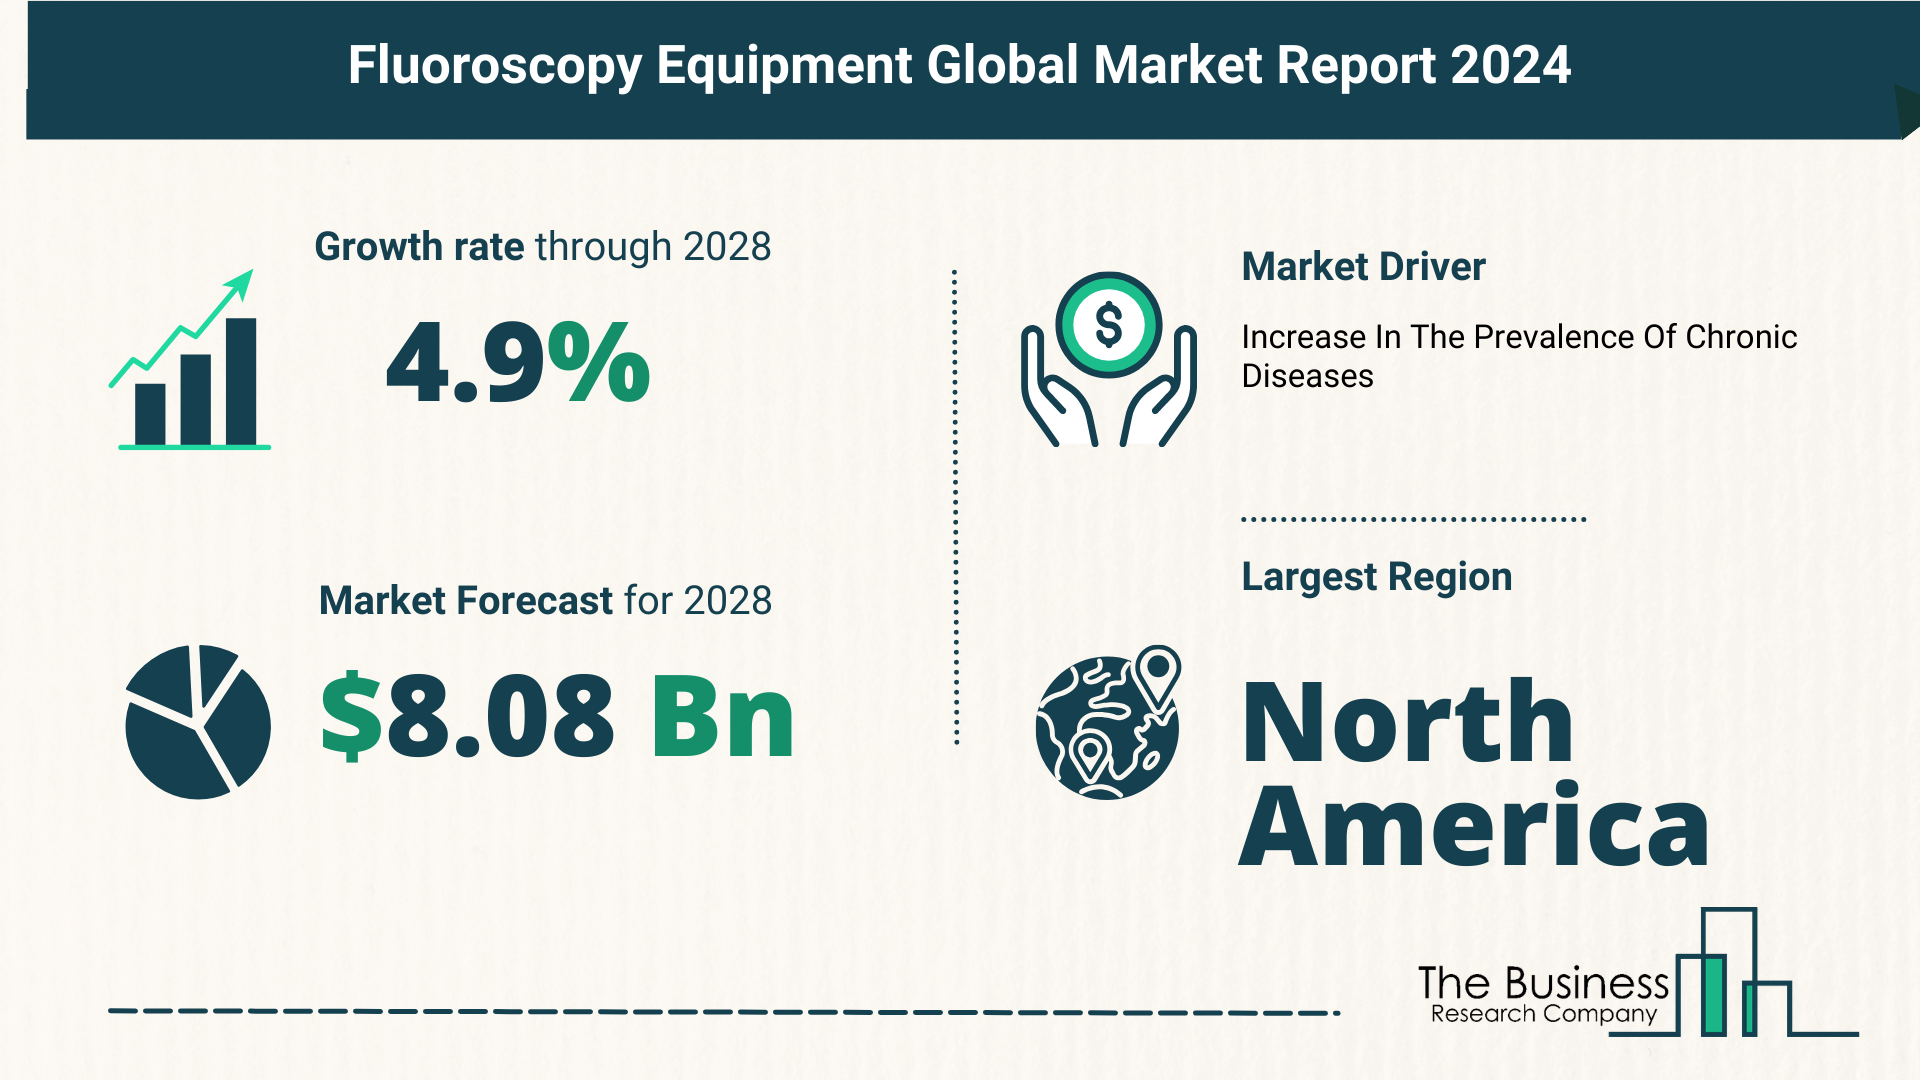 Fluoroscopy Equipment Market Forecast 2024: Forecast Market Size, Drivers And Key Segments